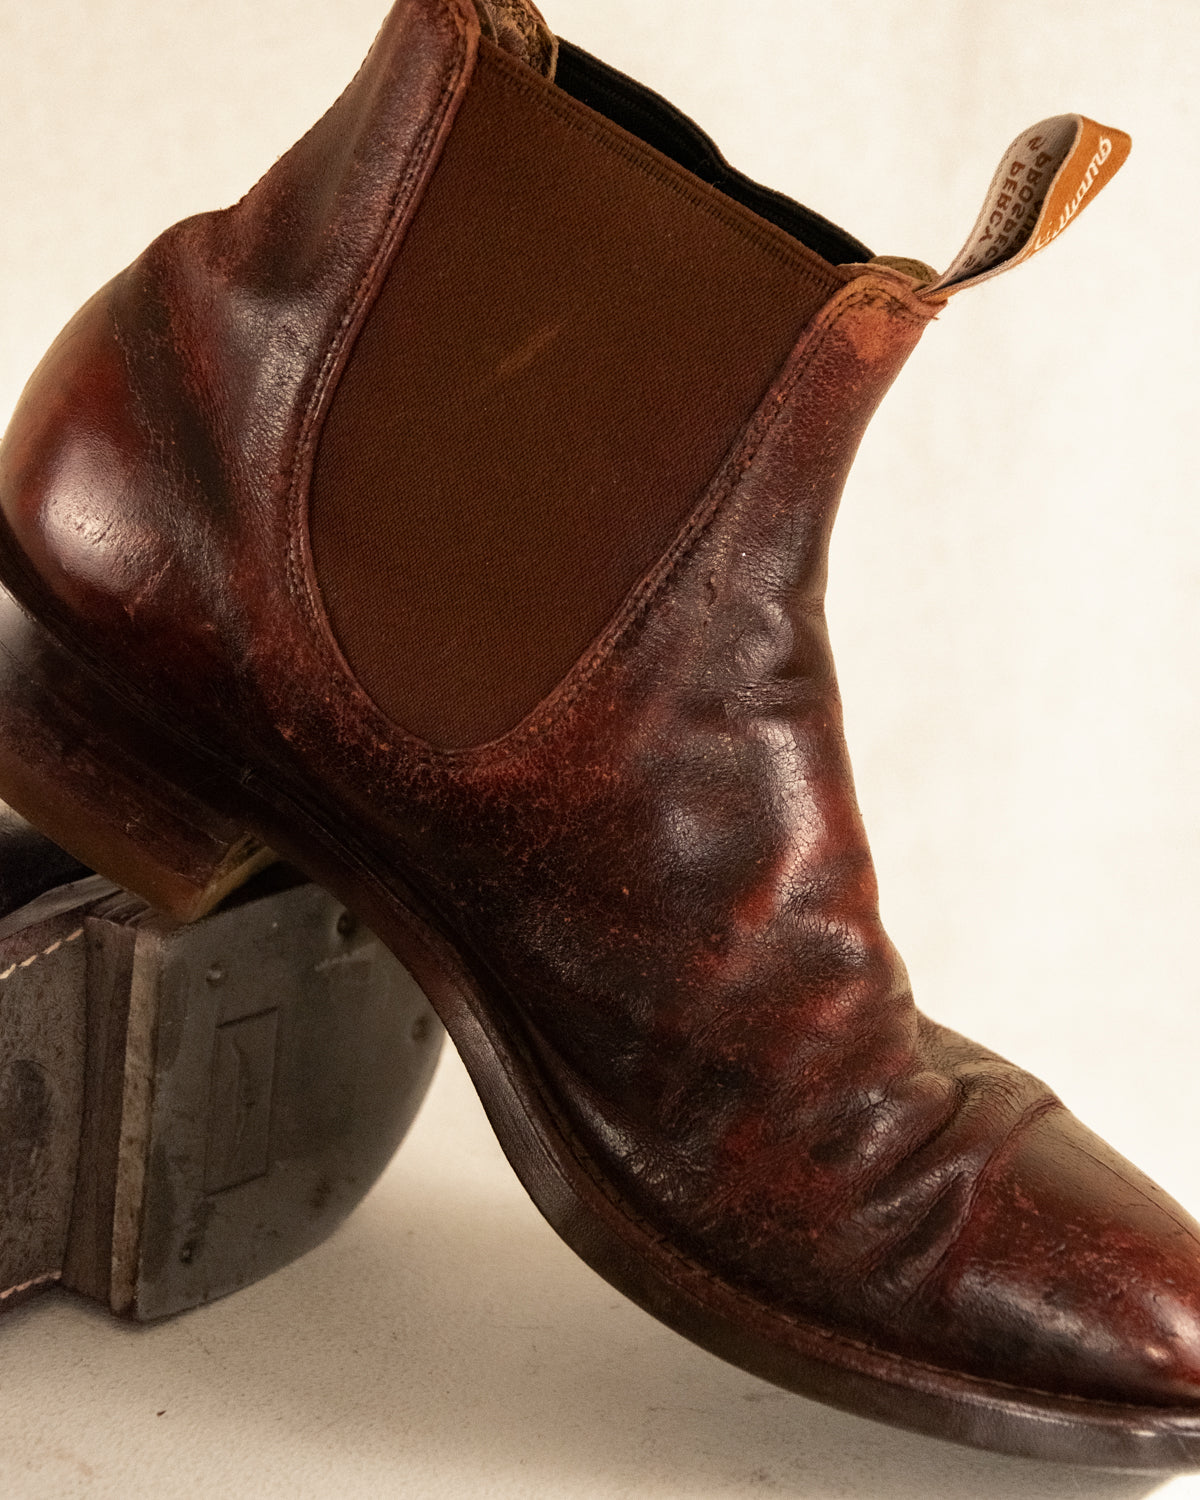 Vintage RM William Boots